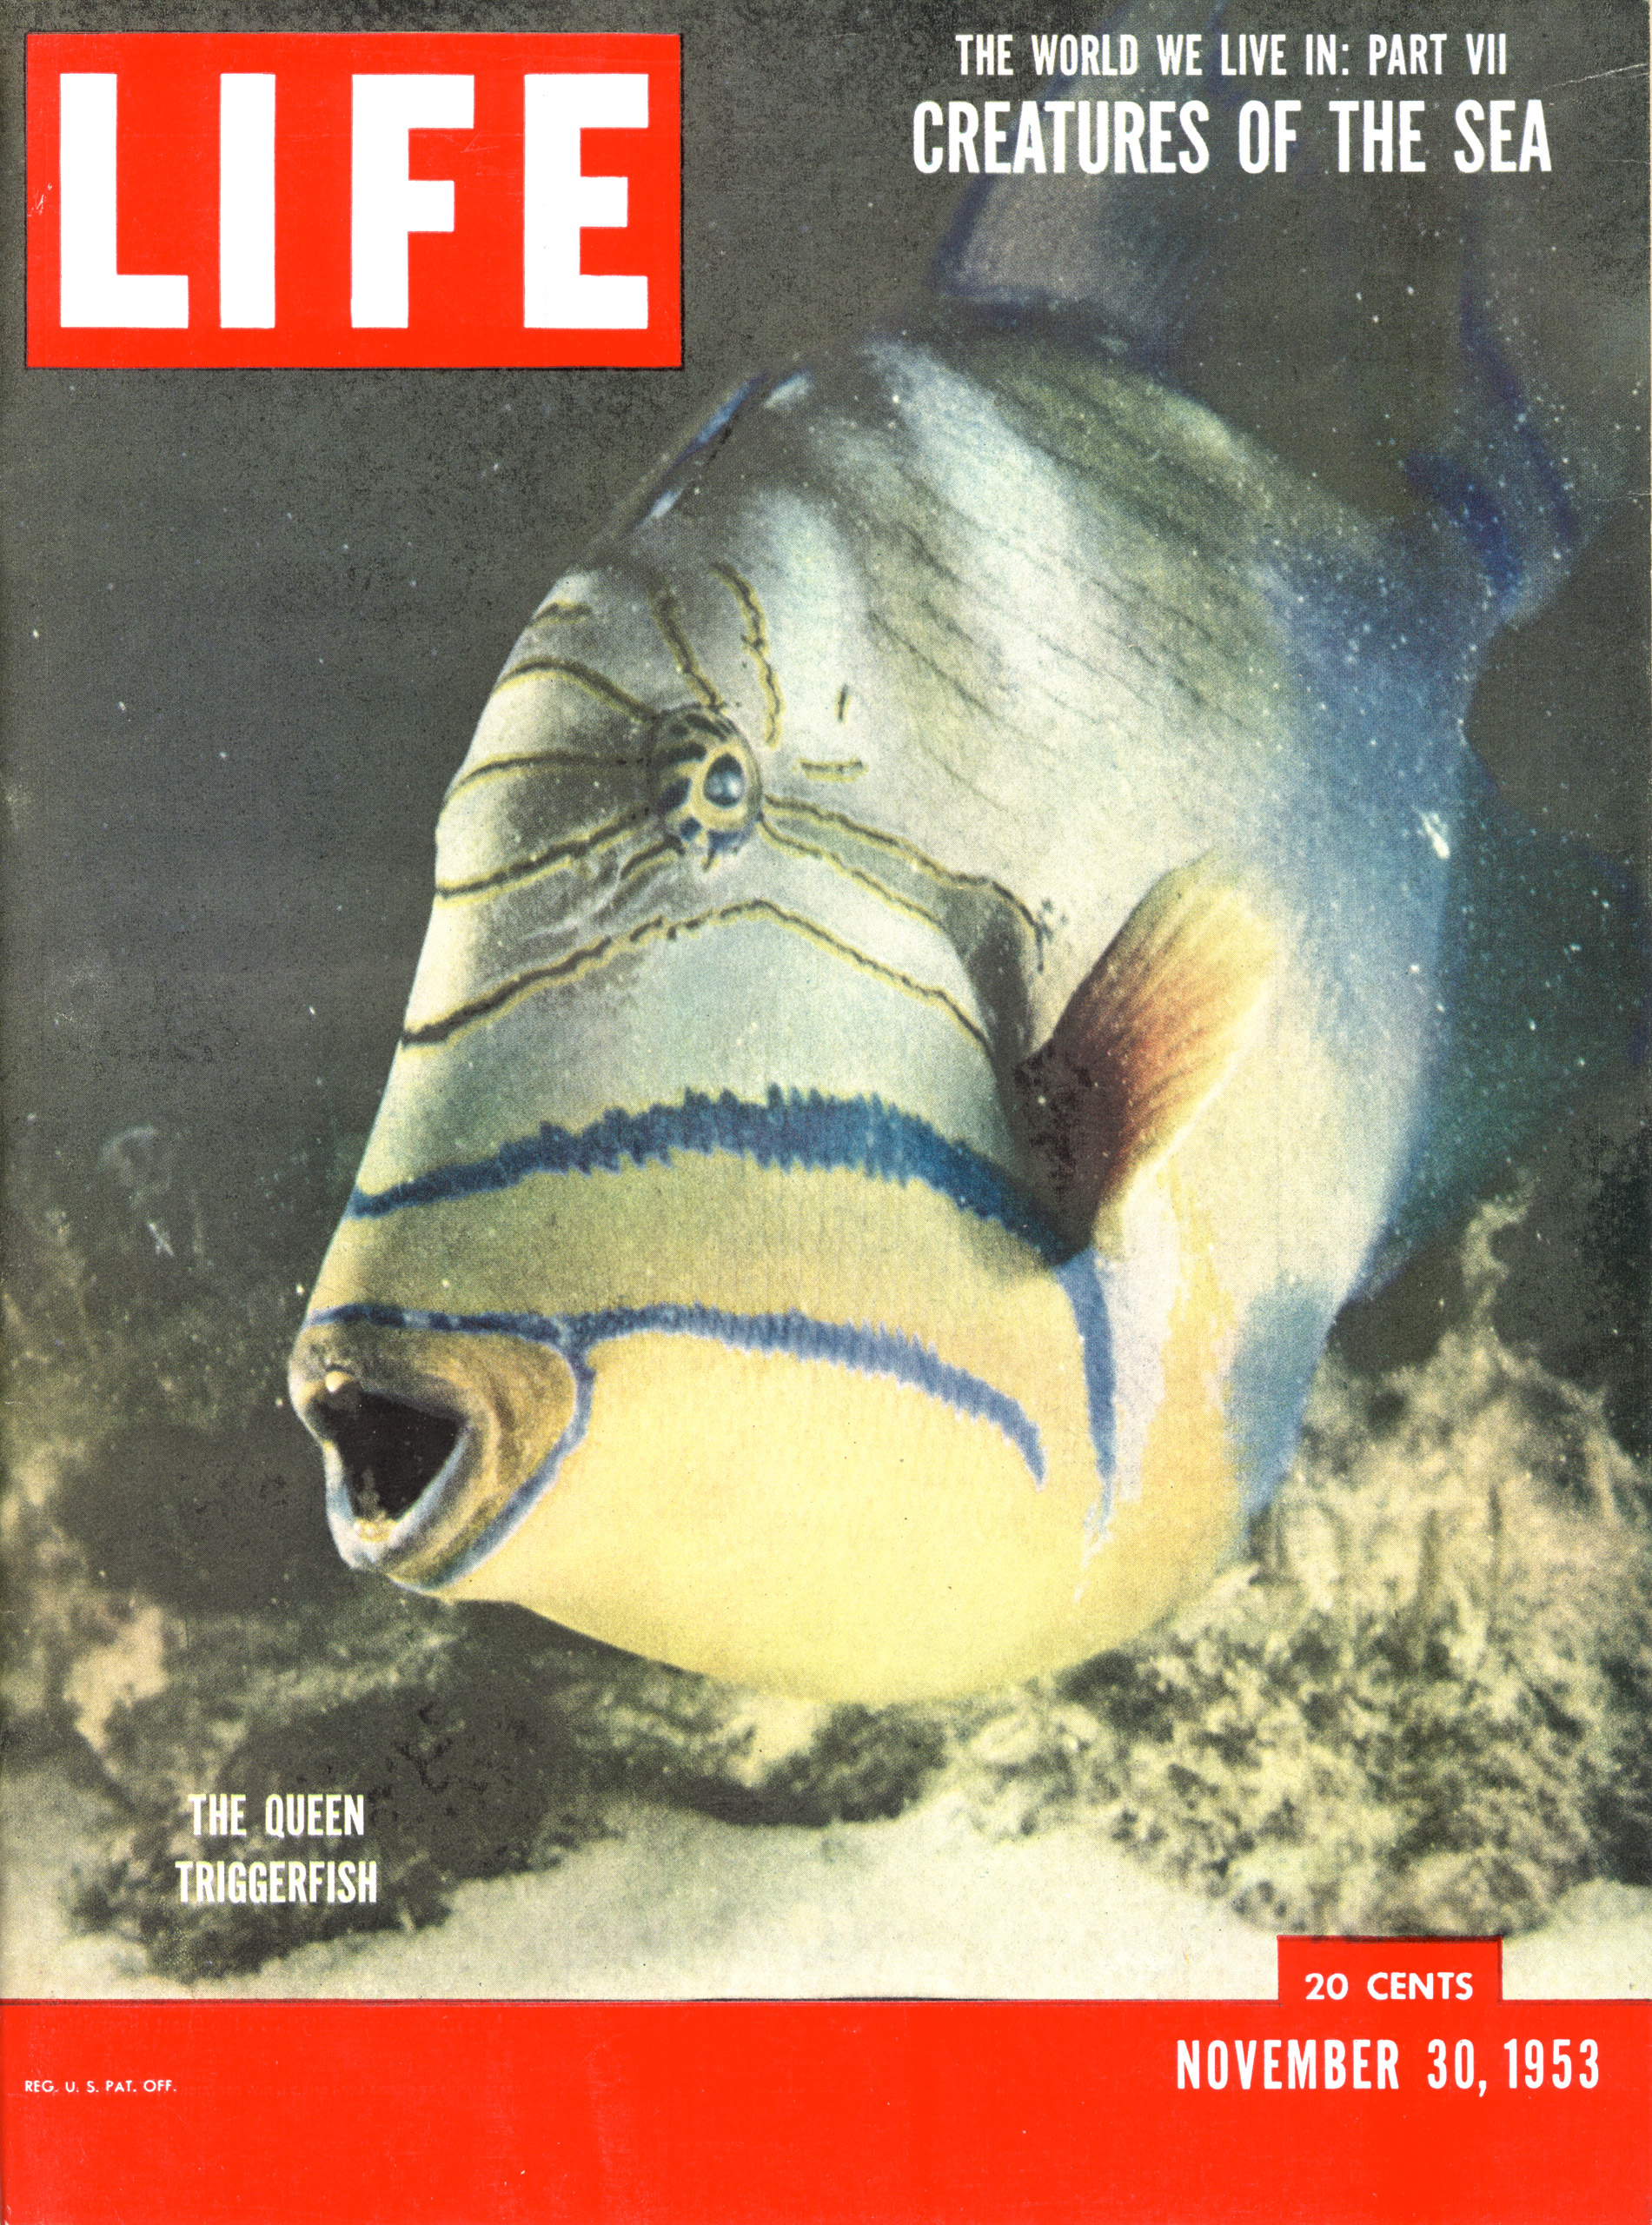 November 30, 1953 LIFE Magazine cover